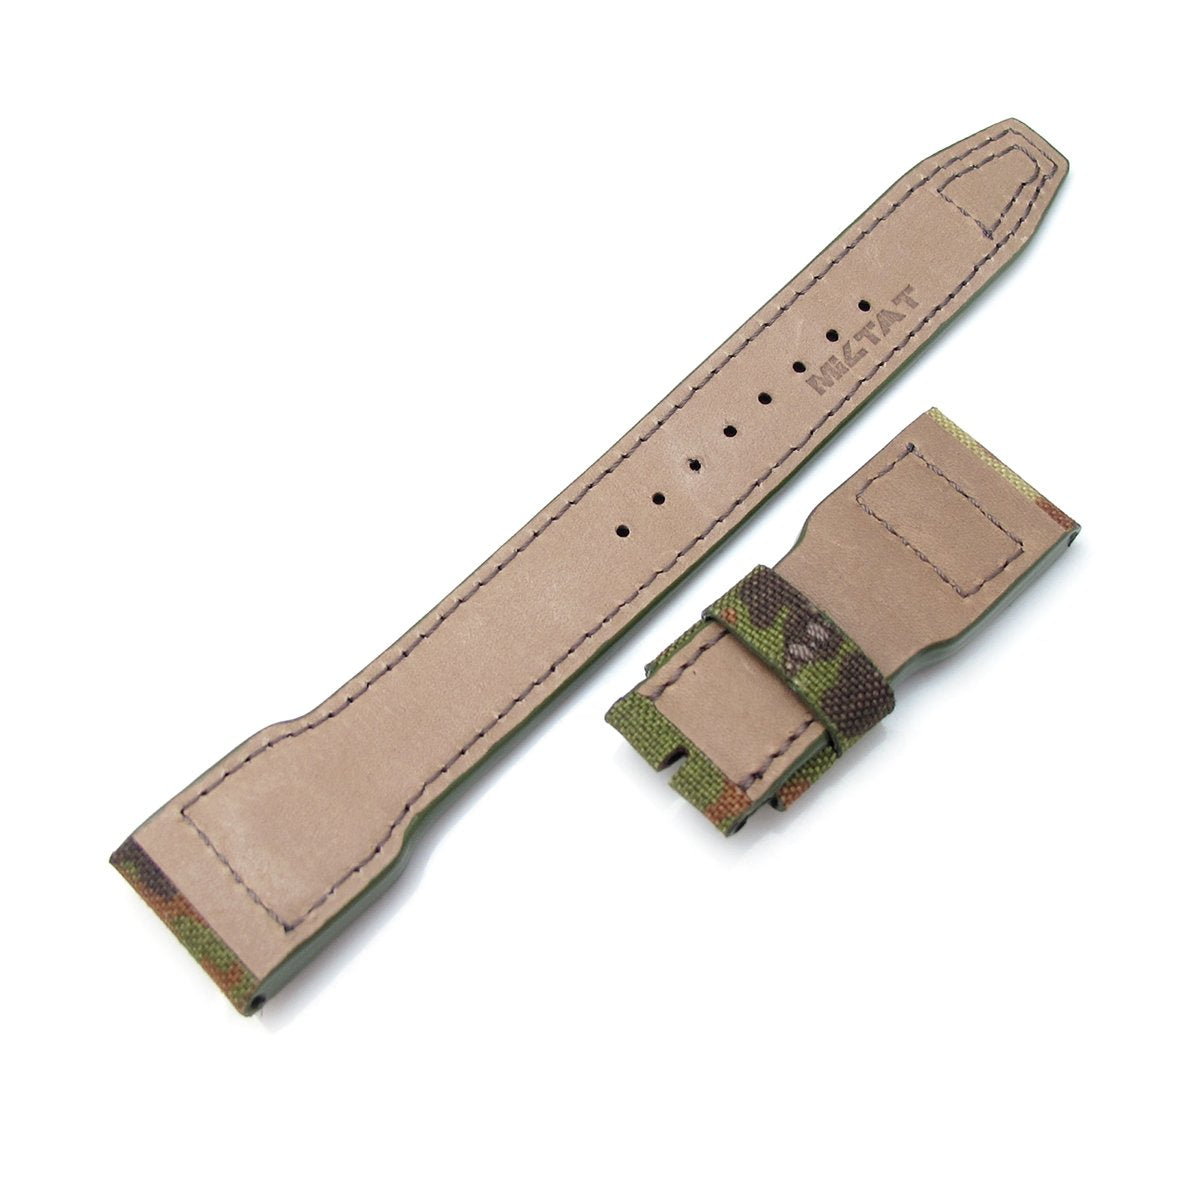 22mm MiLTAT Forest Camo Nylon IWC Big Pilot replacement Strap Rivet Lug Strapcode Watch Bands